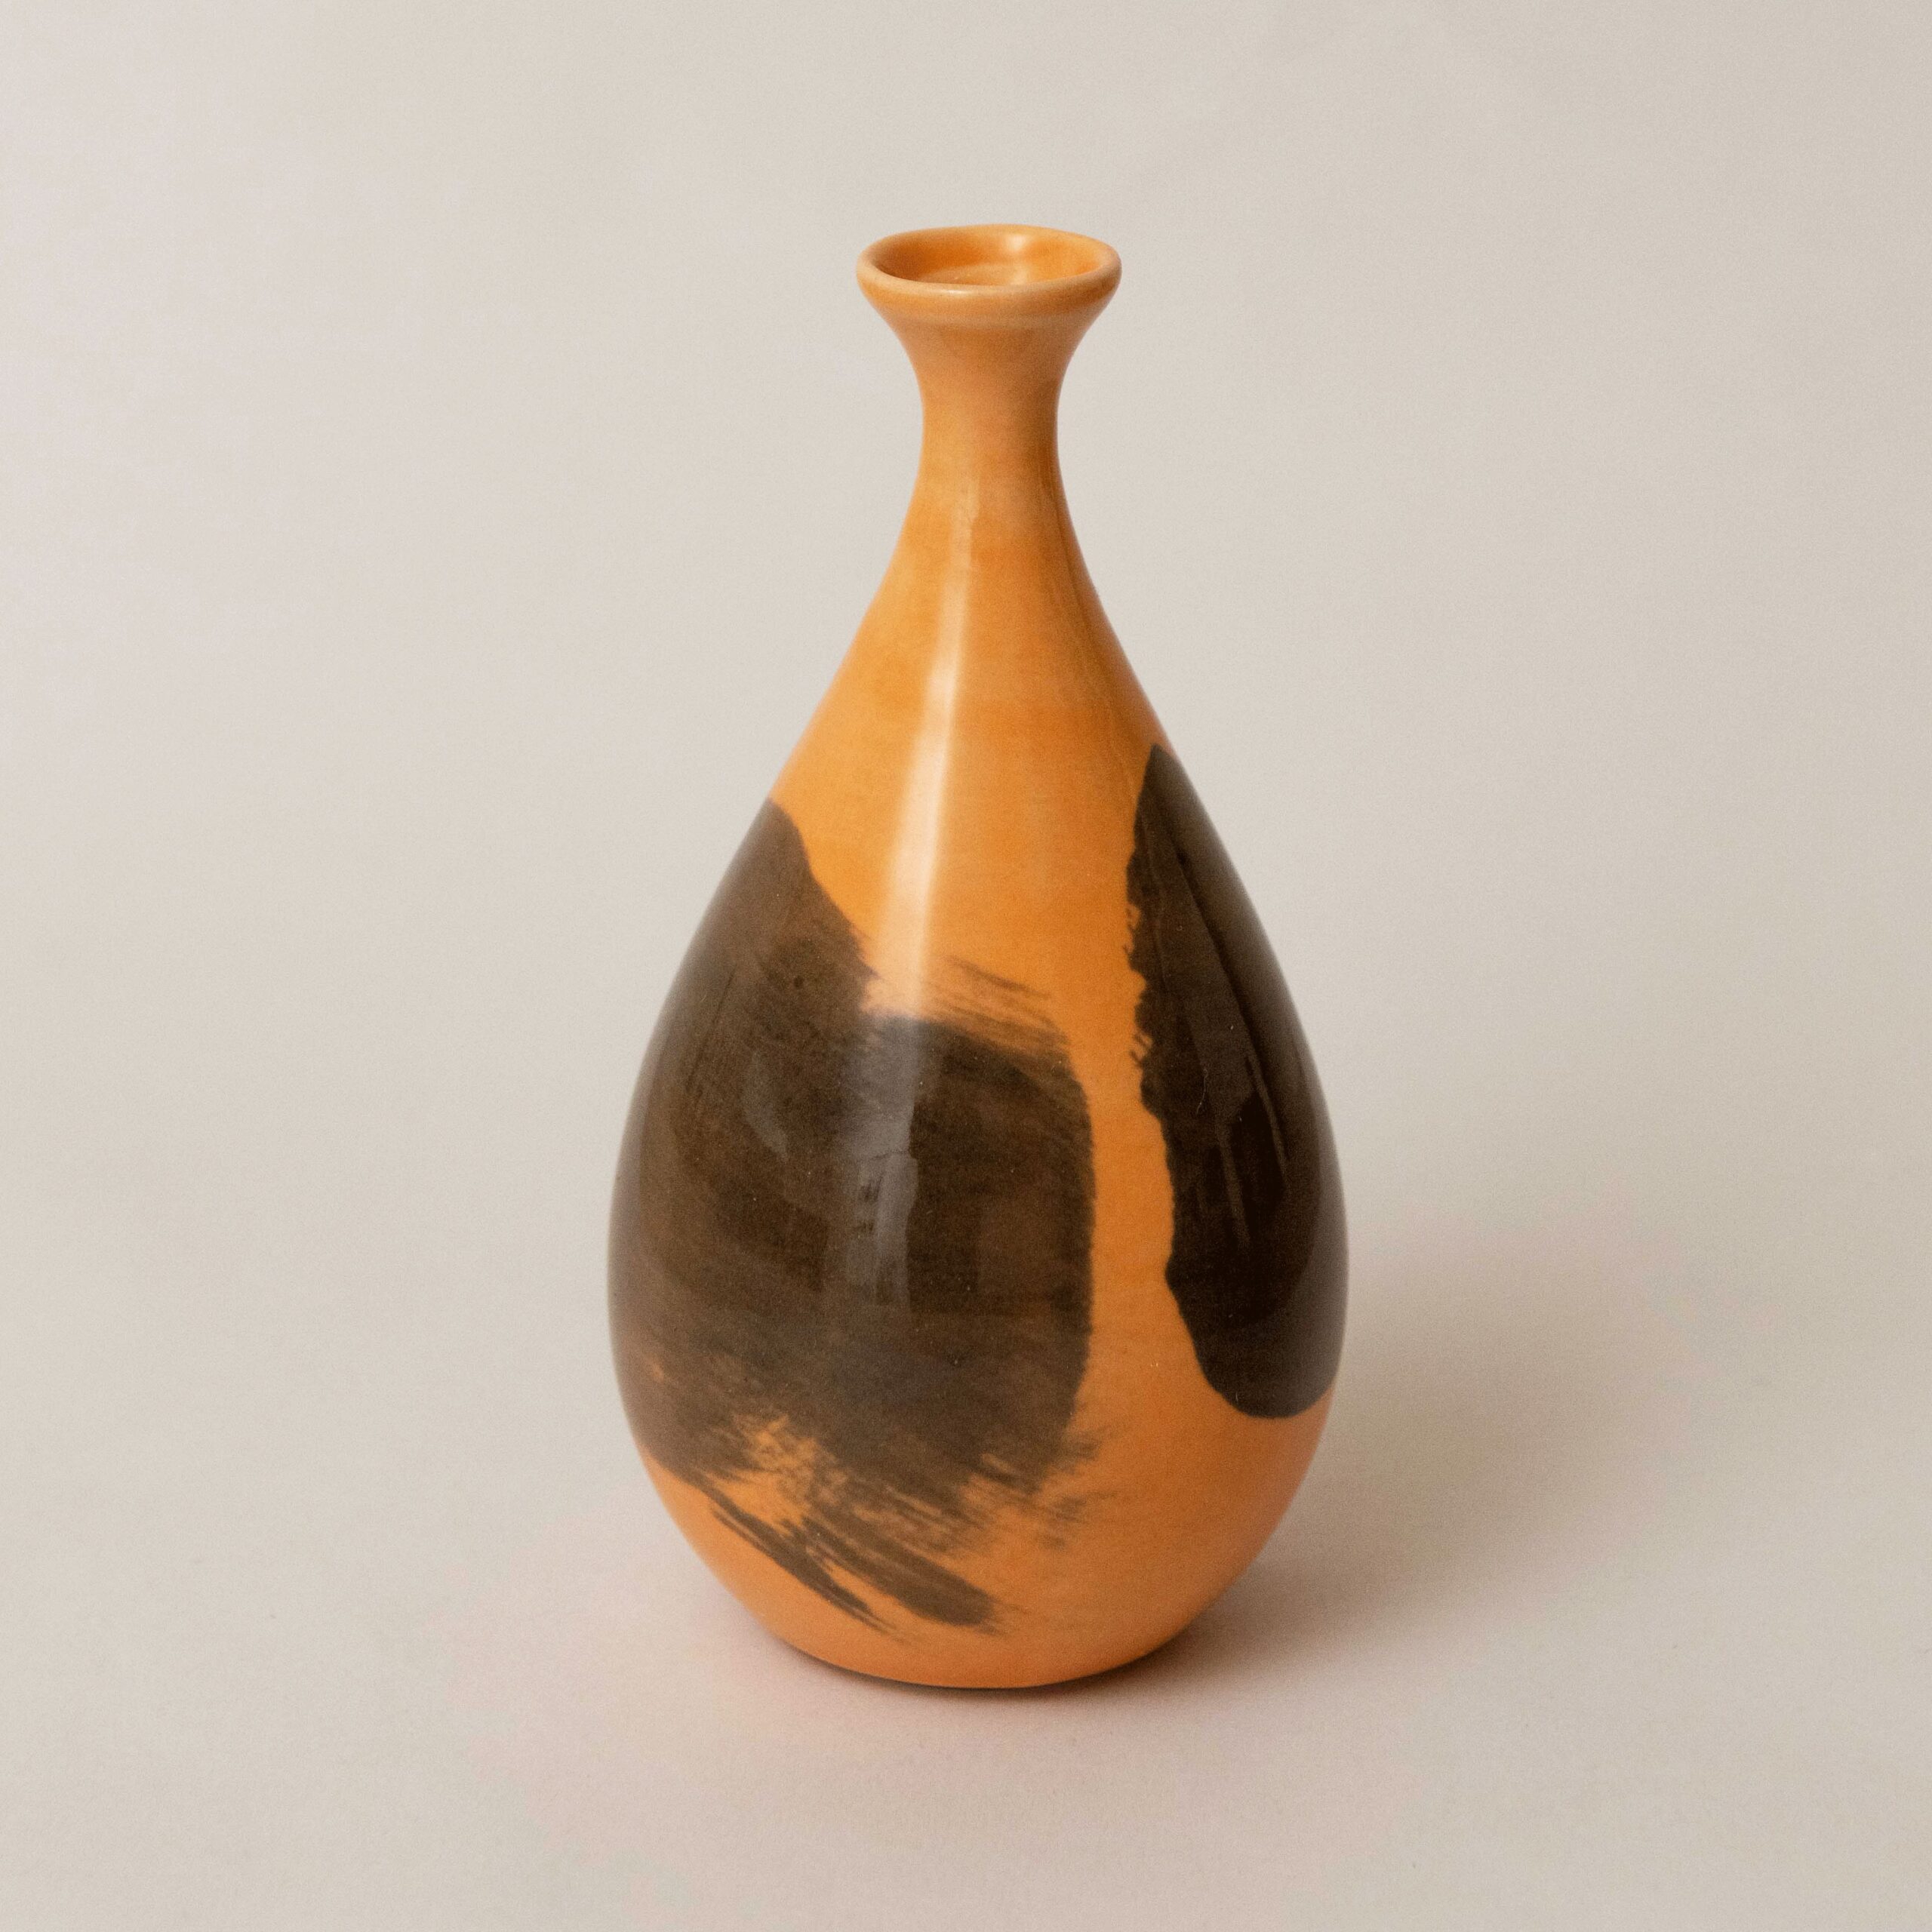 Studio Saboo: Small Brushed Vase in Orange Product Image 1 of 1